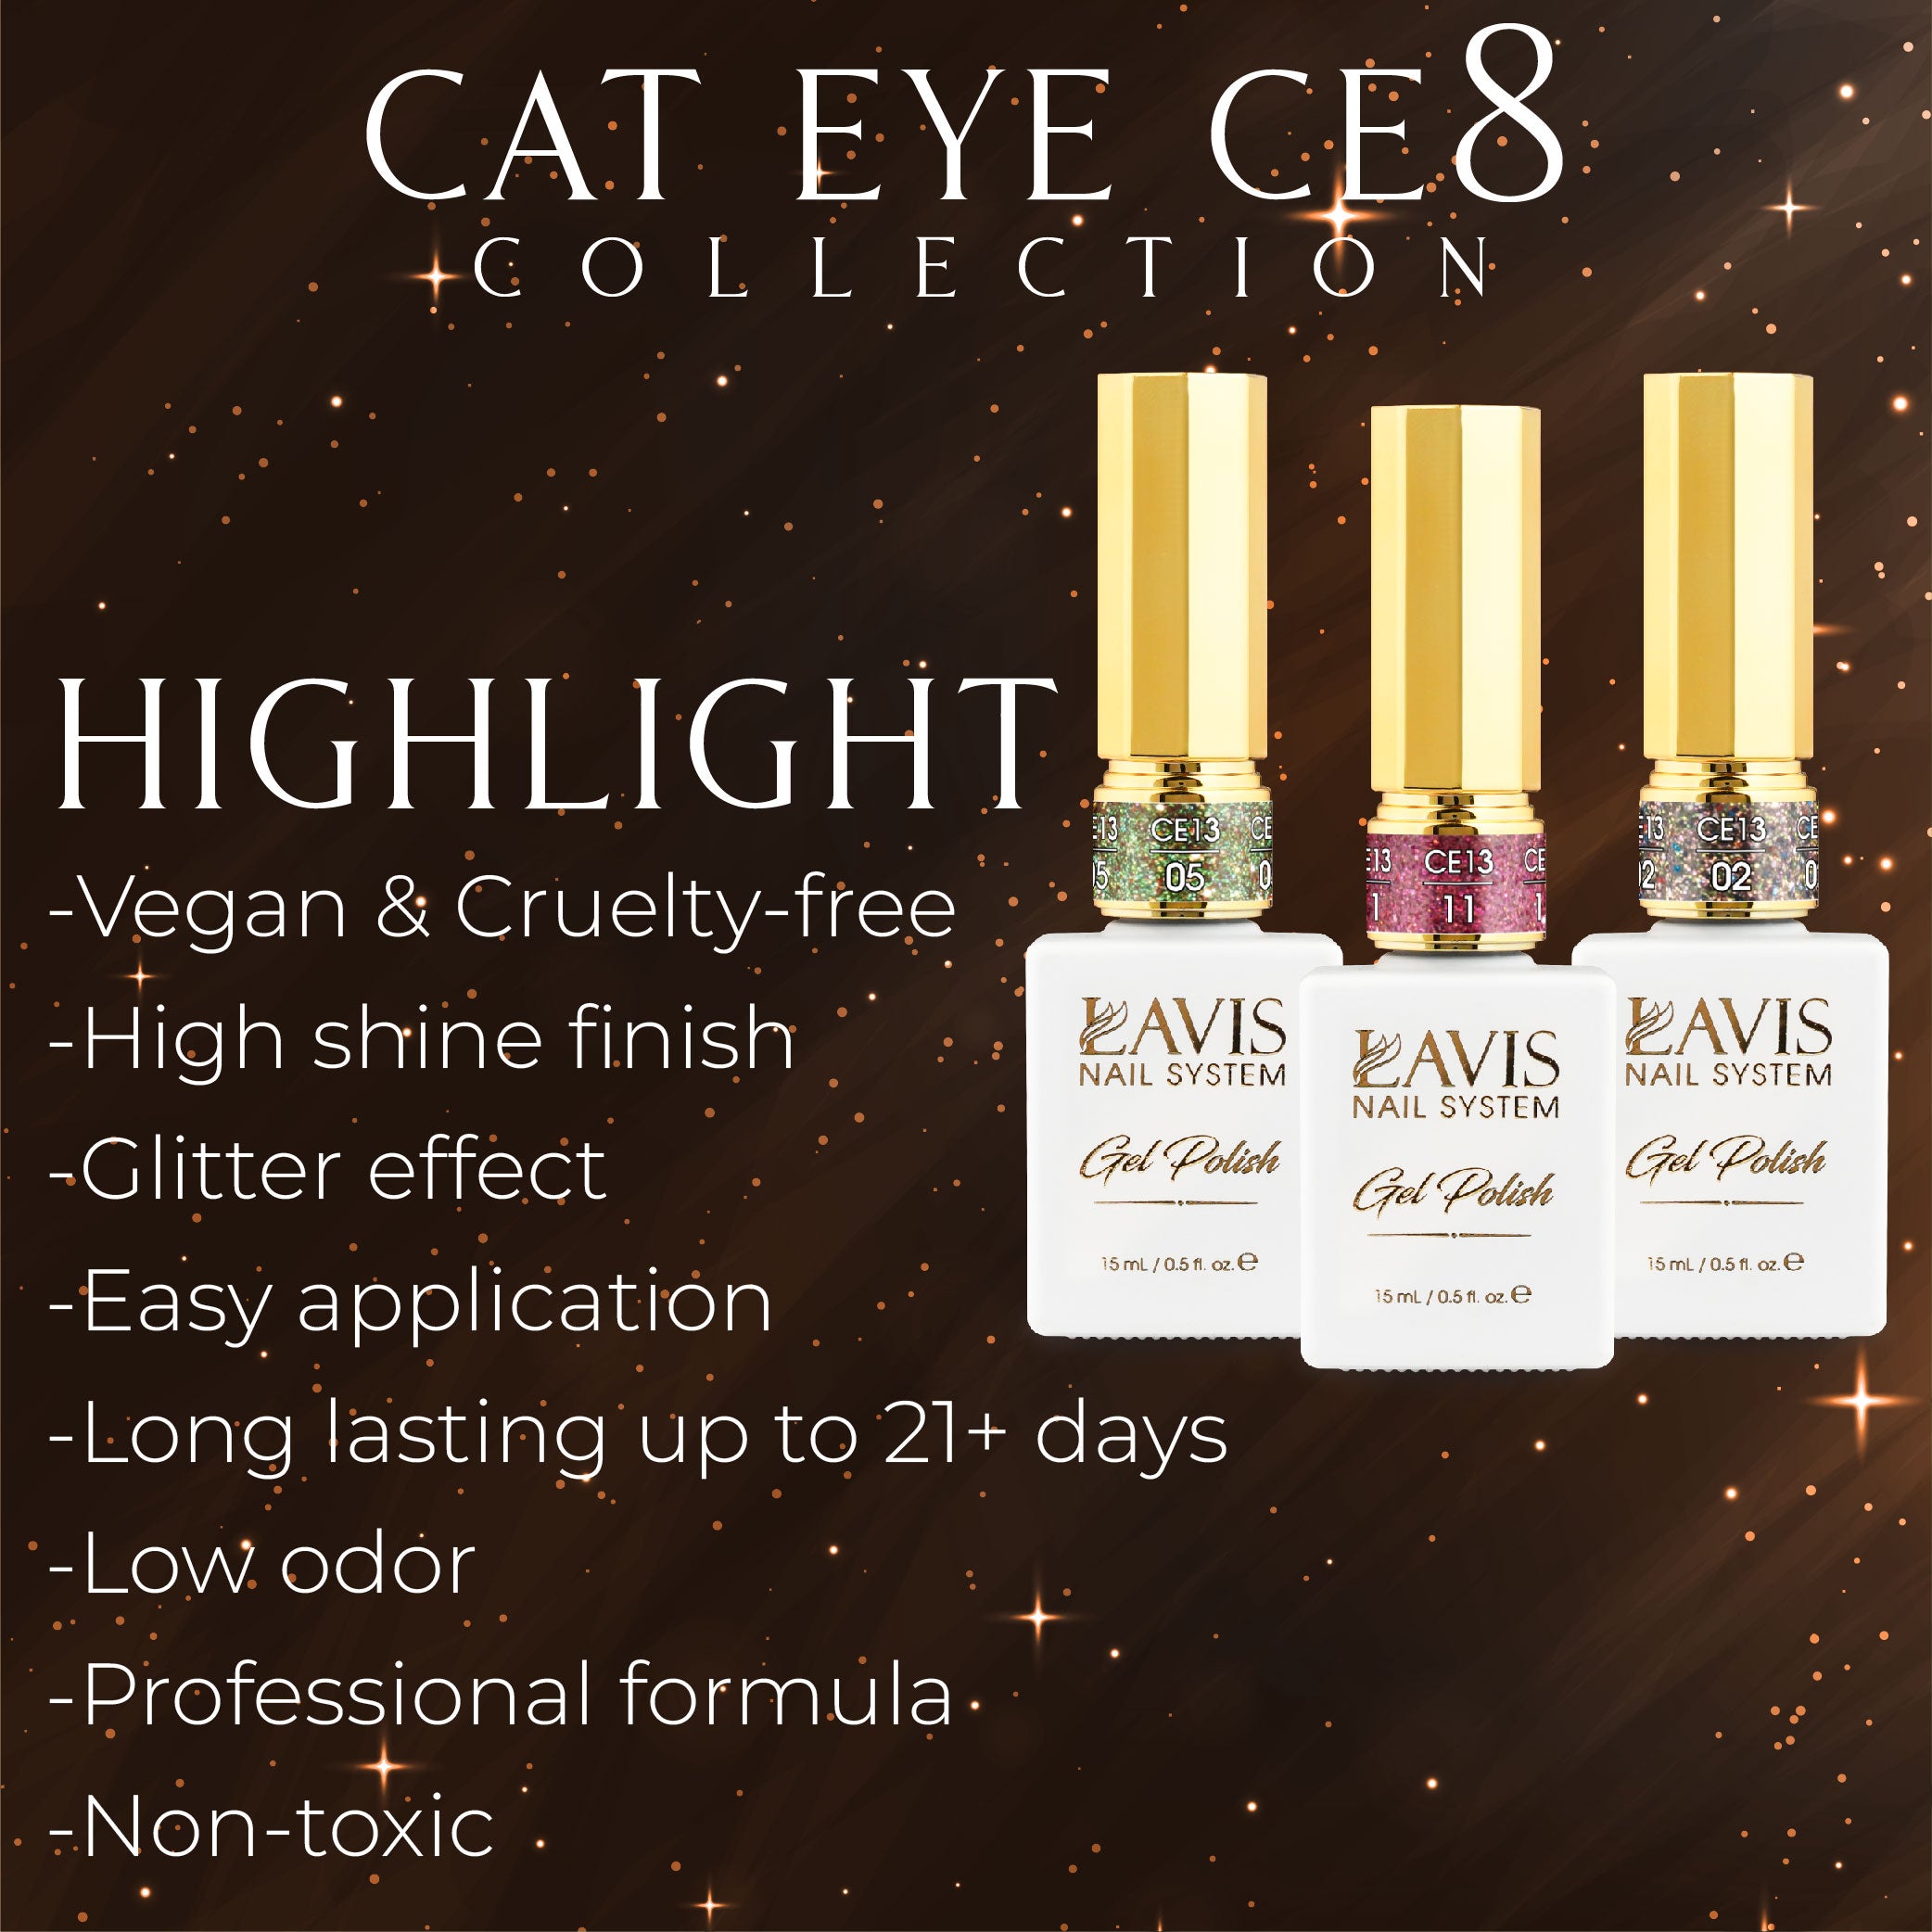 LAVIS Cat Eyes CE8 - 11 - Gel Polish 0.5 oz - Lavis Hidden Treasures Collection